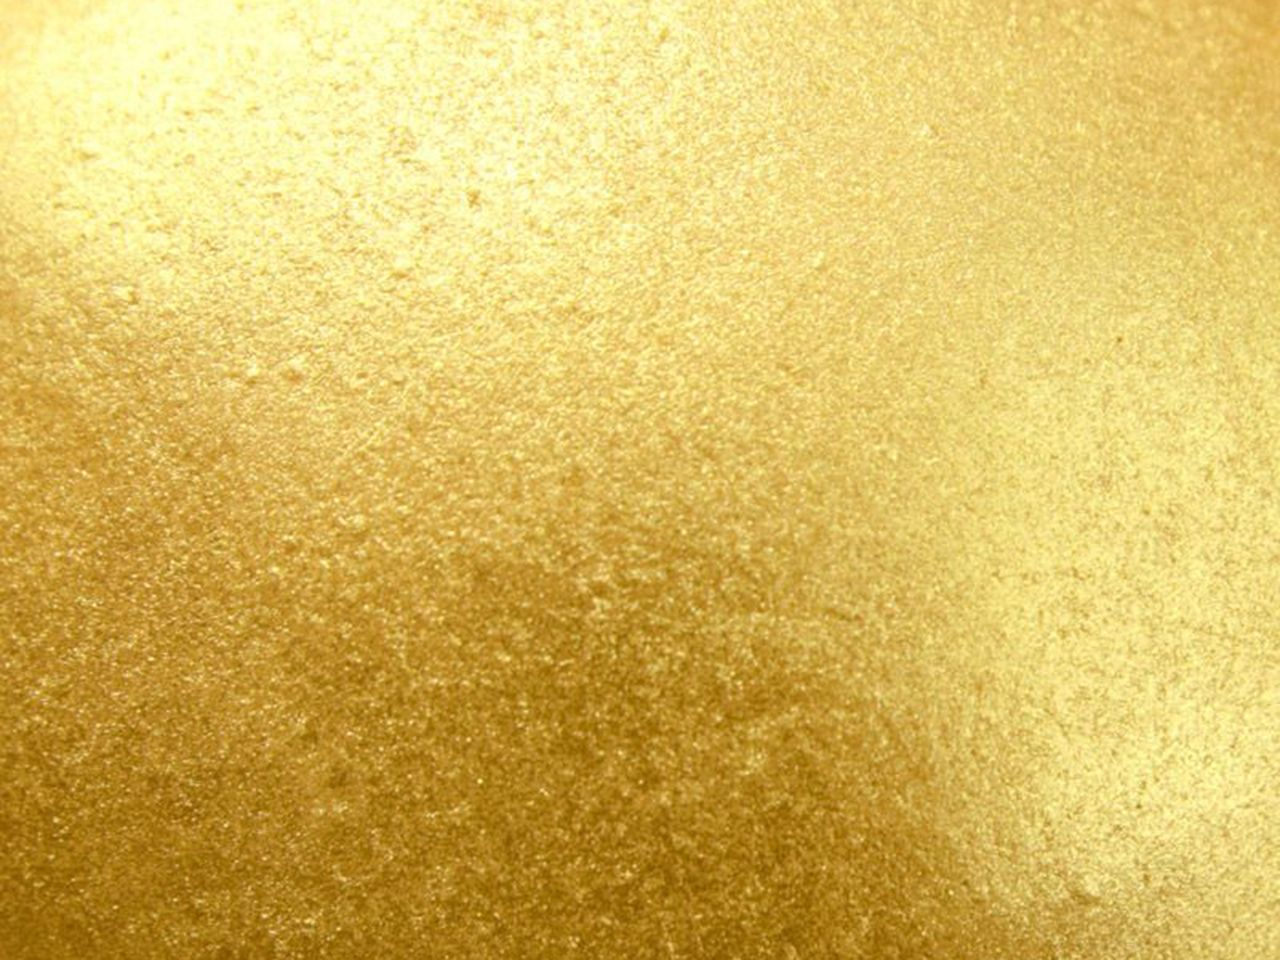 Puderfarbe Metallic Golden Sands 4g